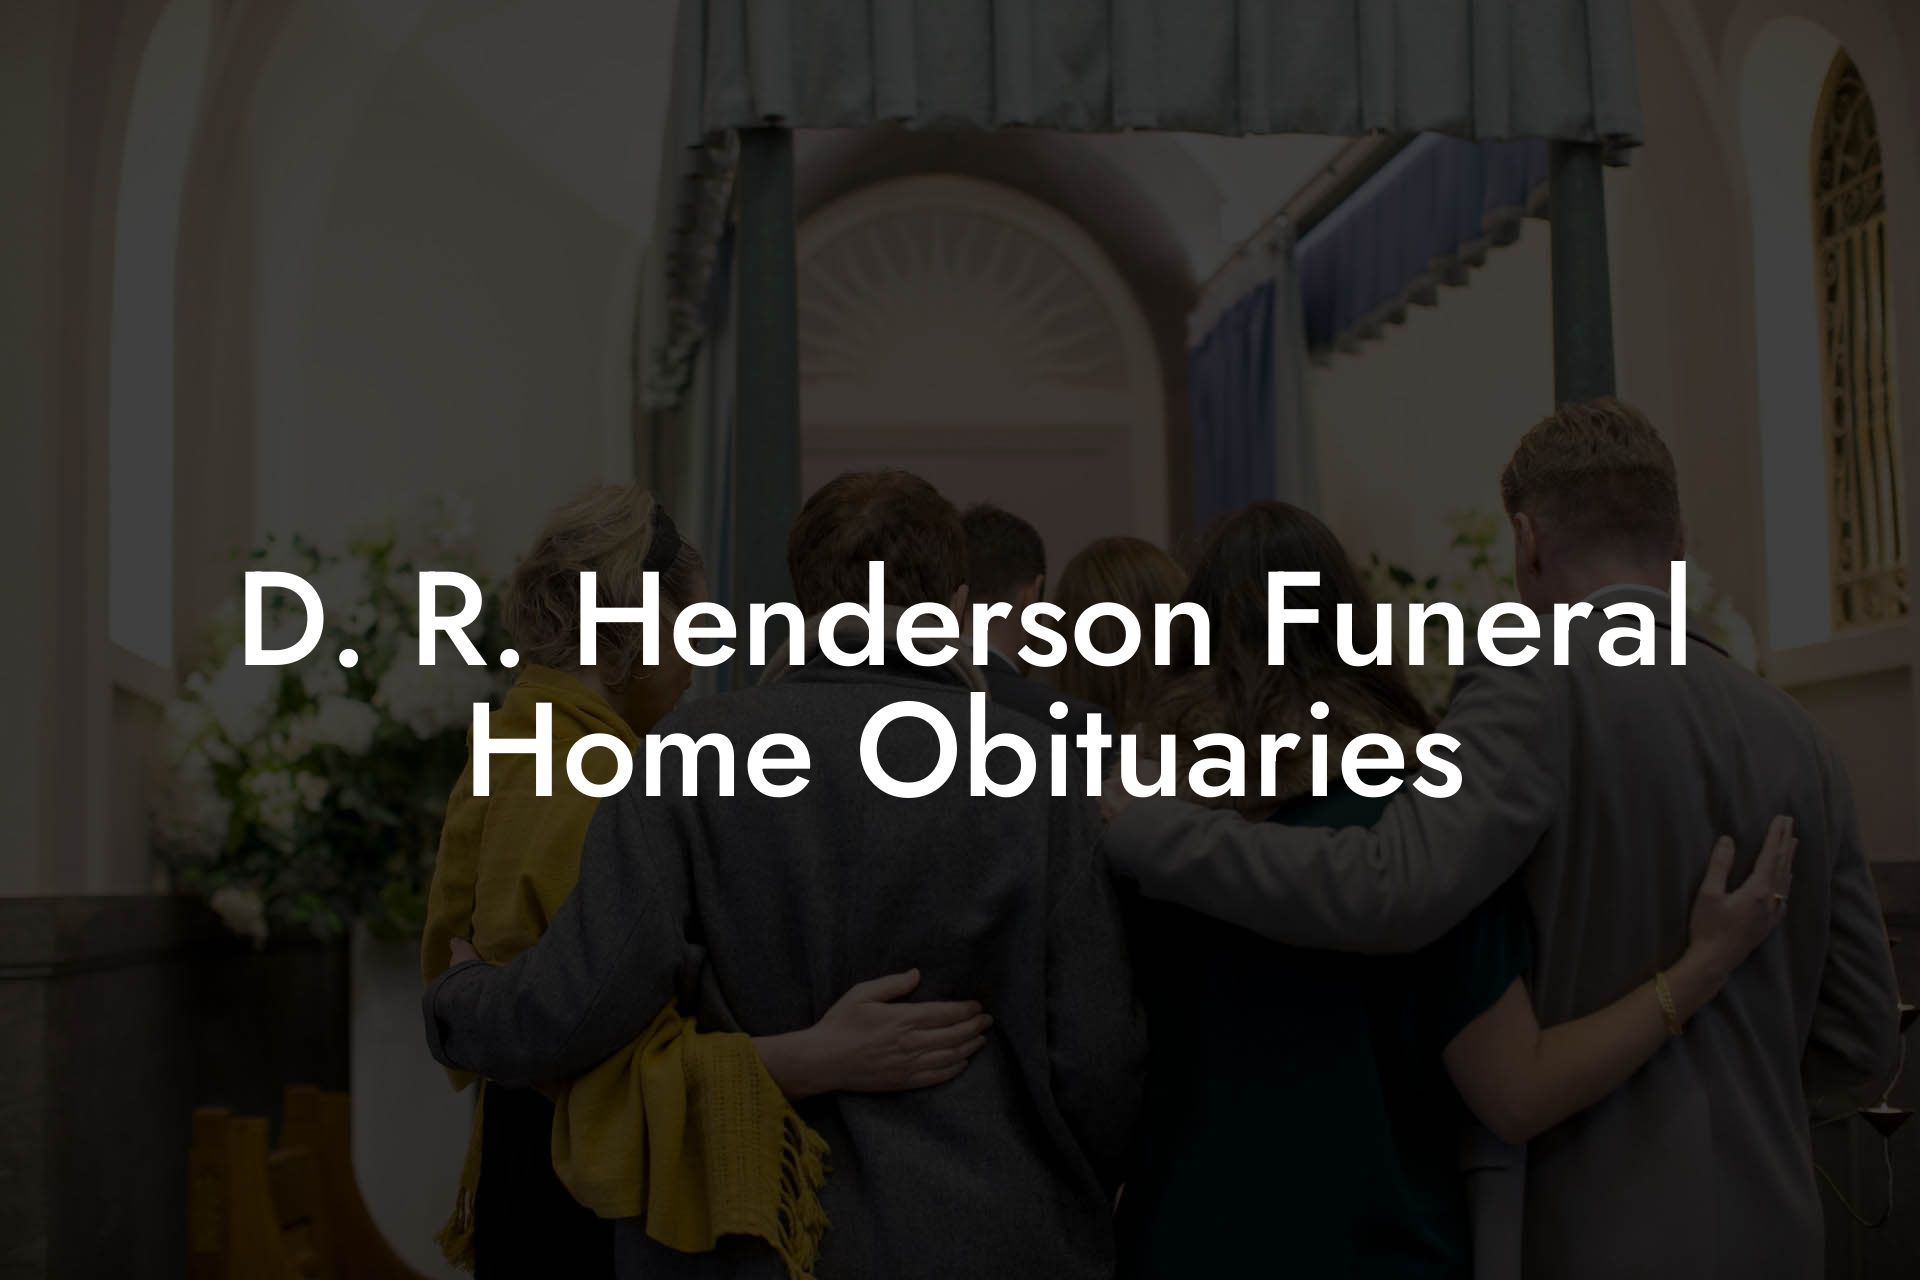 D. R. Henderson Funeral Home Obituaries